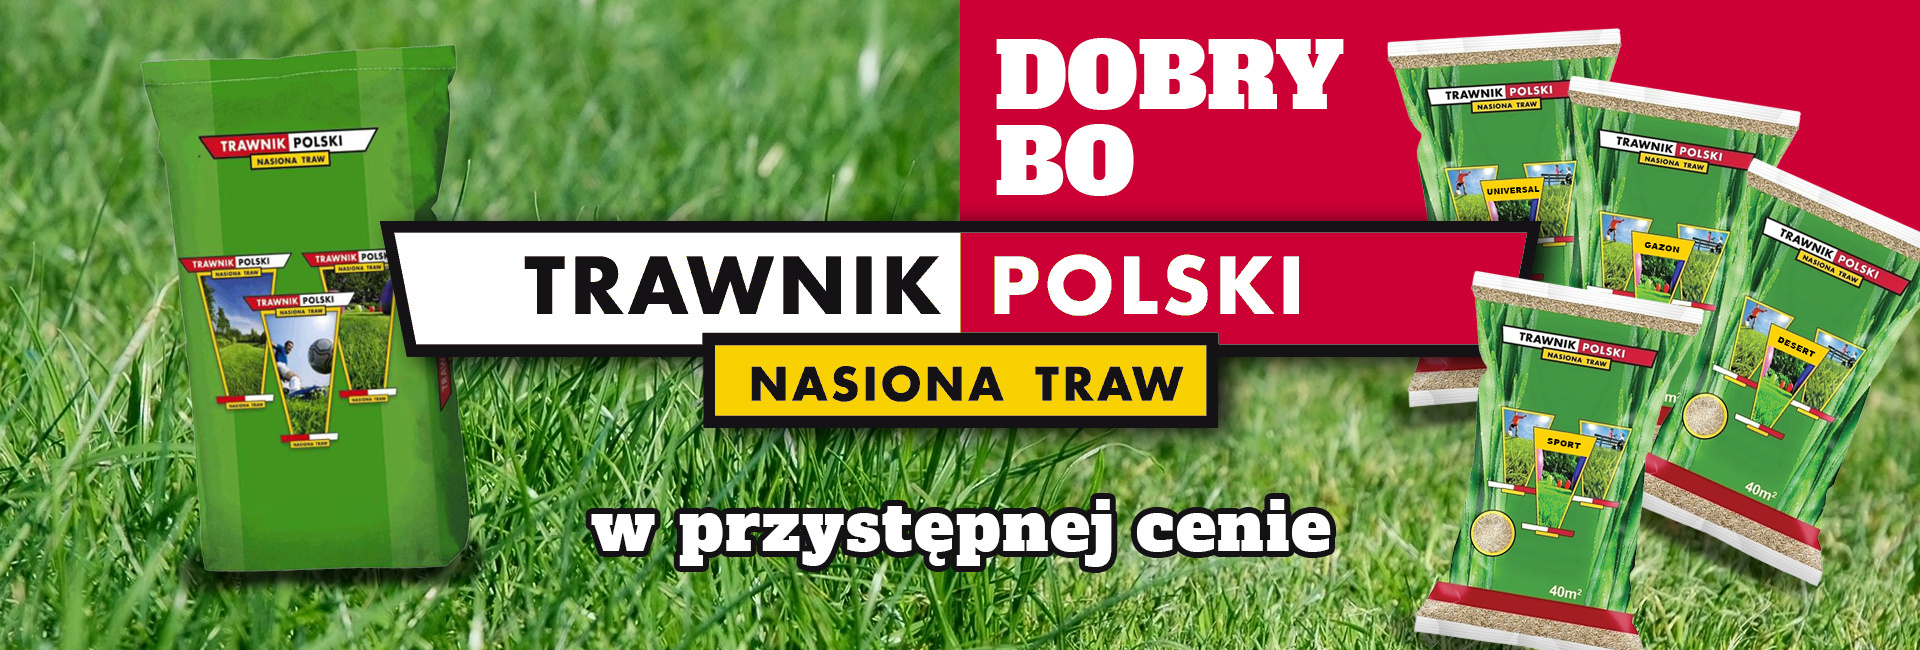 Trawnik Polski